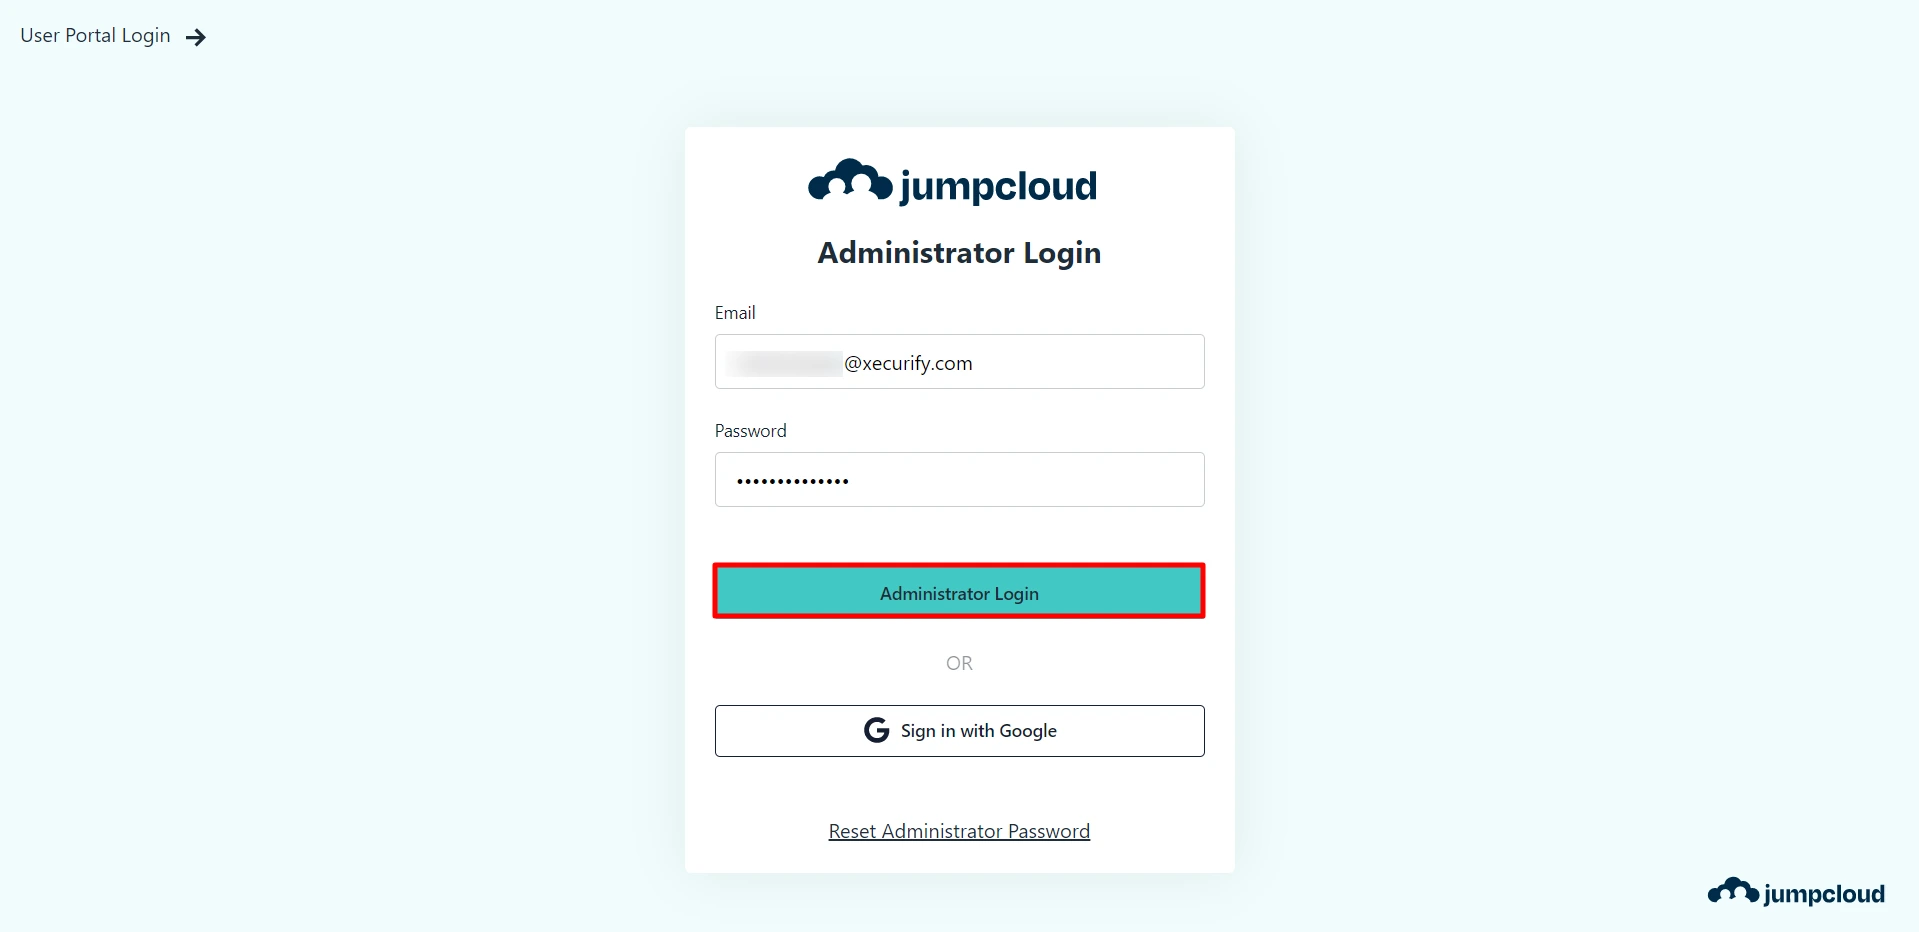  Jumpcloud SAML Single Sign-On SSO into Joomla | Login using Jumpcloud into Joomla, Administrator